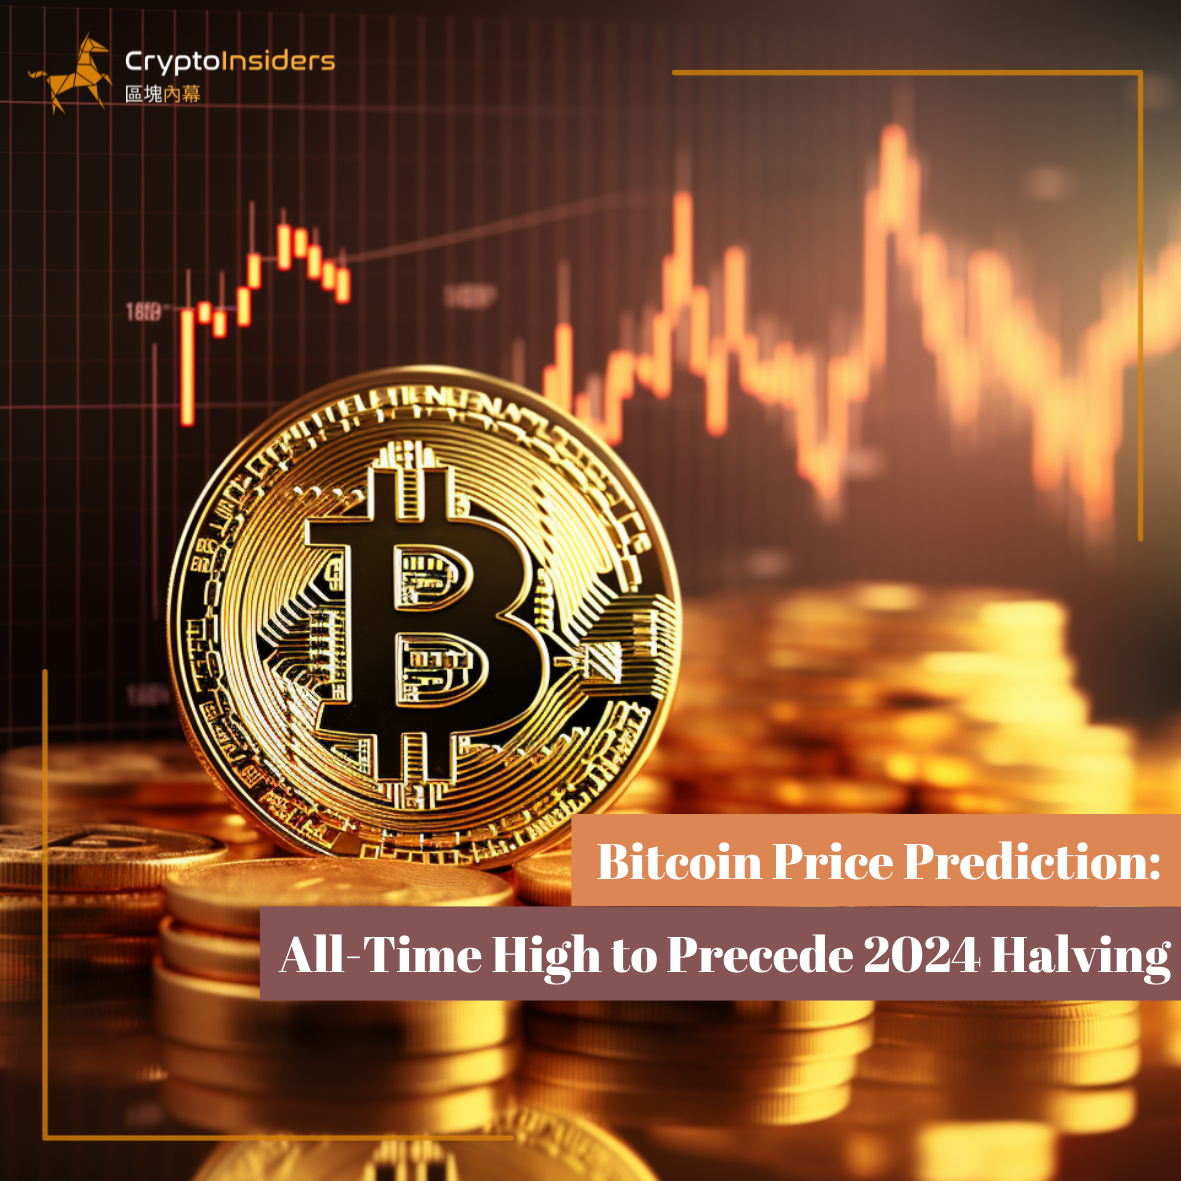 Bitcoin-Price-Prediction-All-Time-High-to-Precede-2024-Halving-Crypto-Insiders-Hong-Kong-Blockchain-News